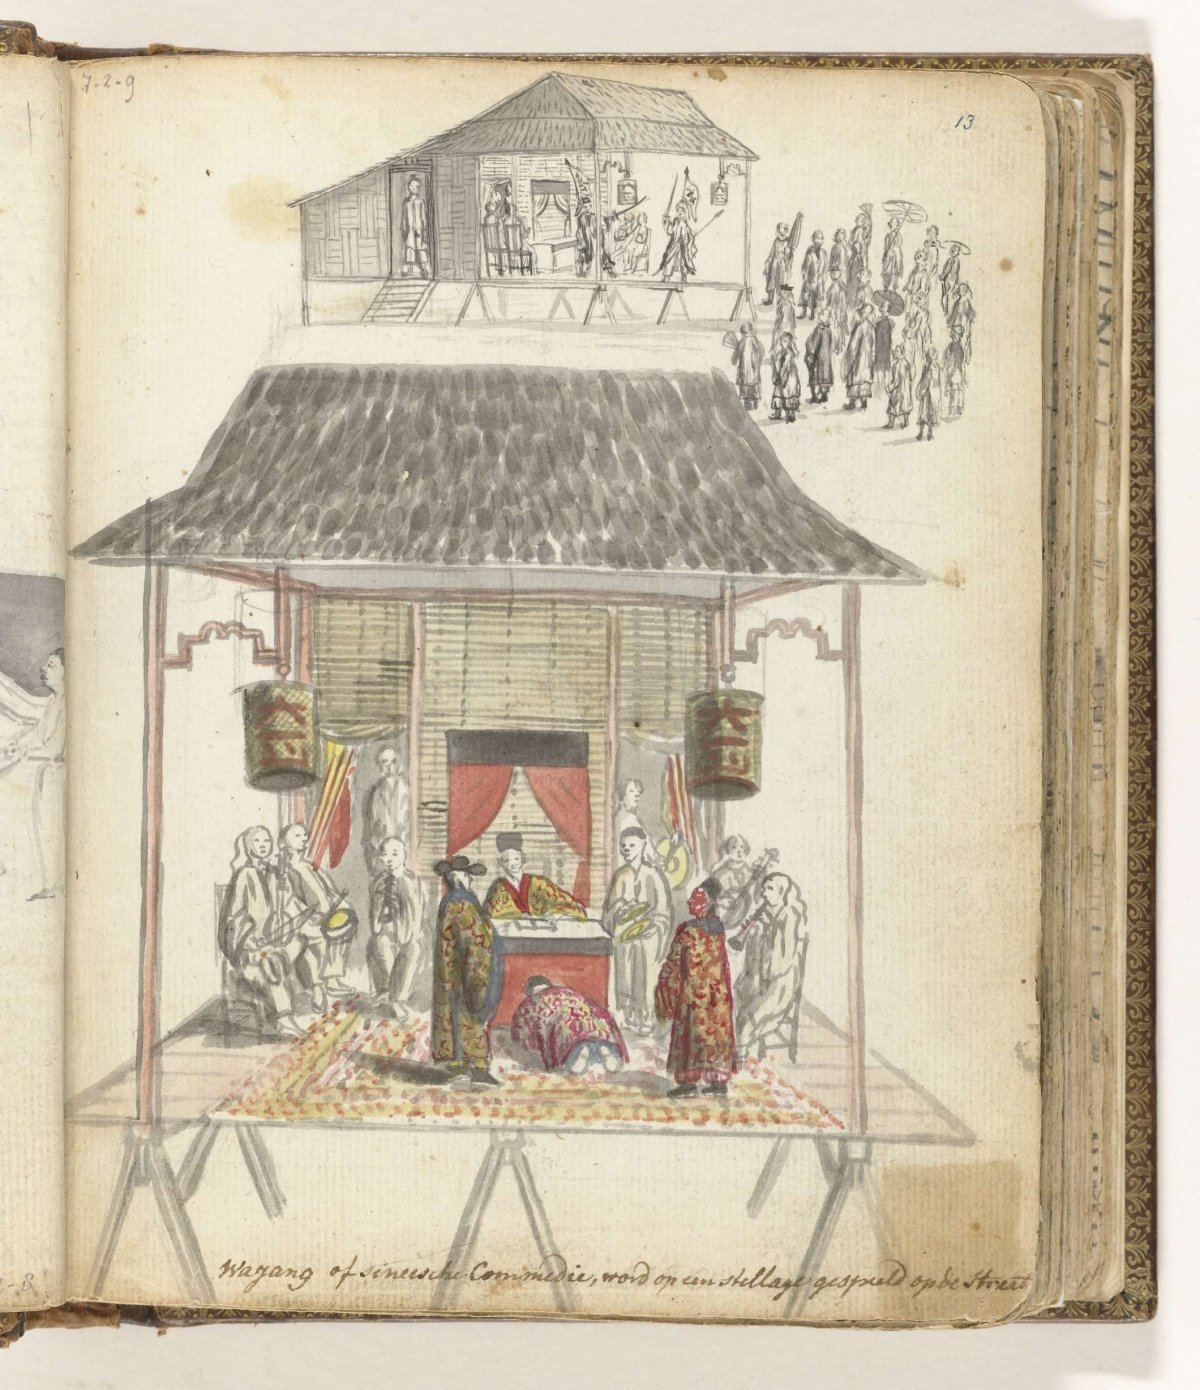 Chinese street theatre, Jan Brandes, 1779 - 1785